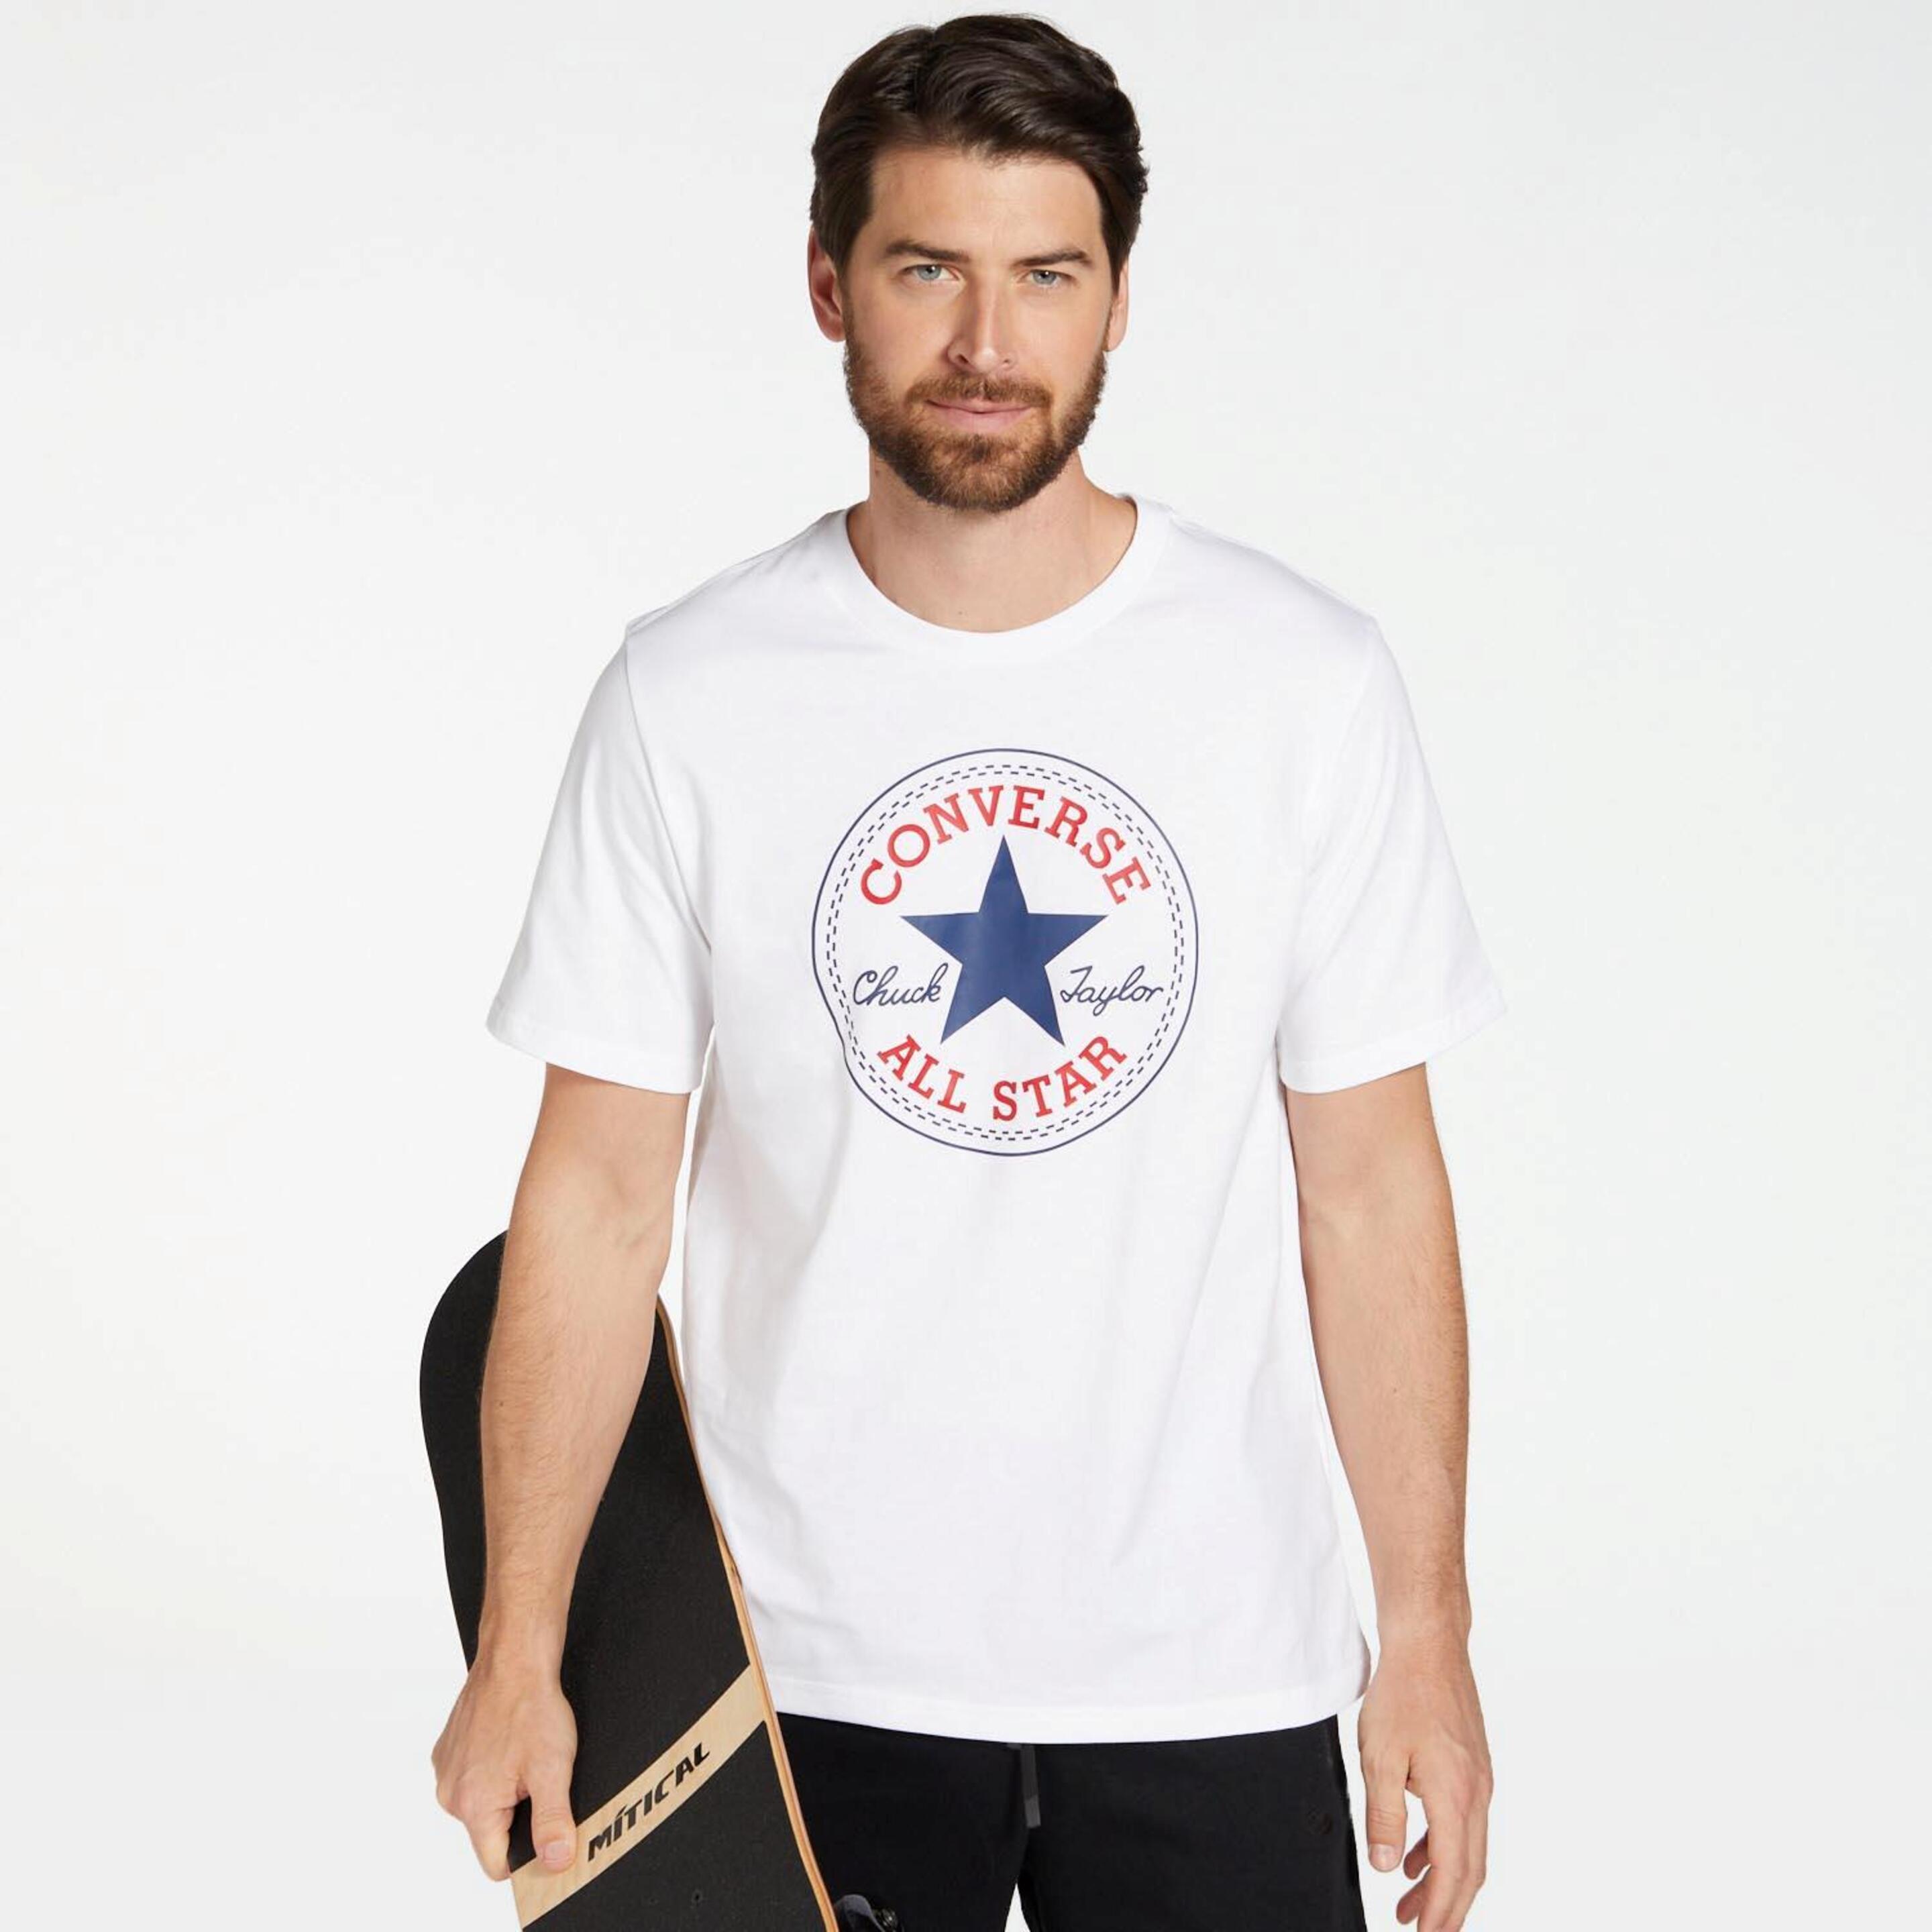 Converse All Star Patch - blanco - T-shirt Homem